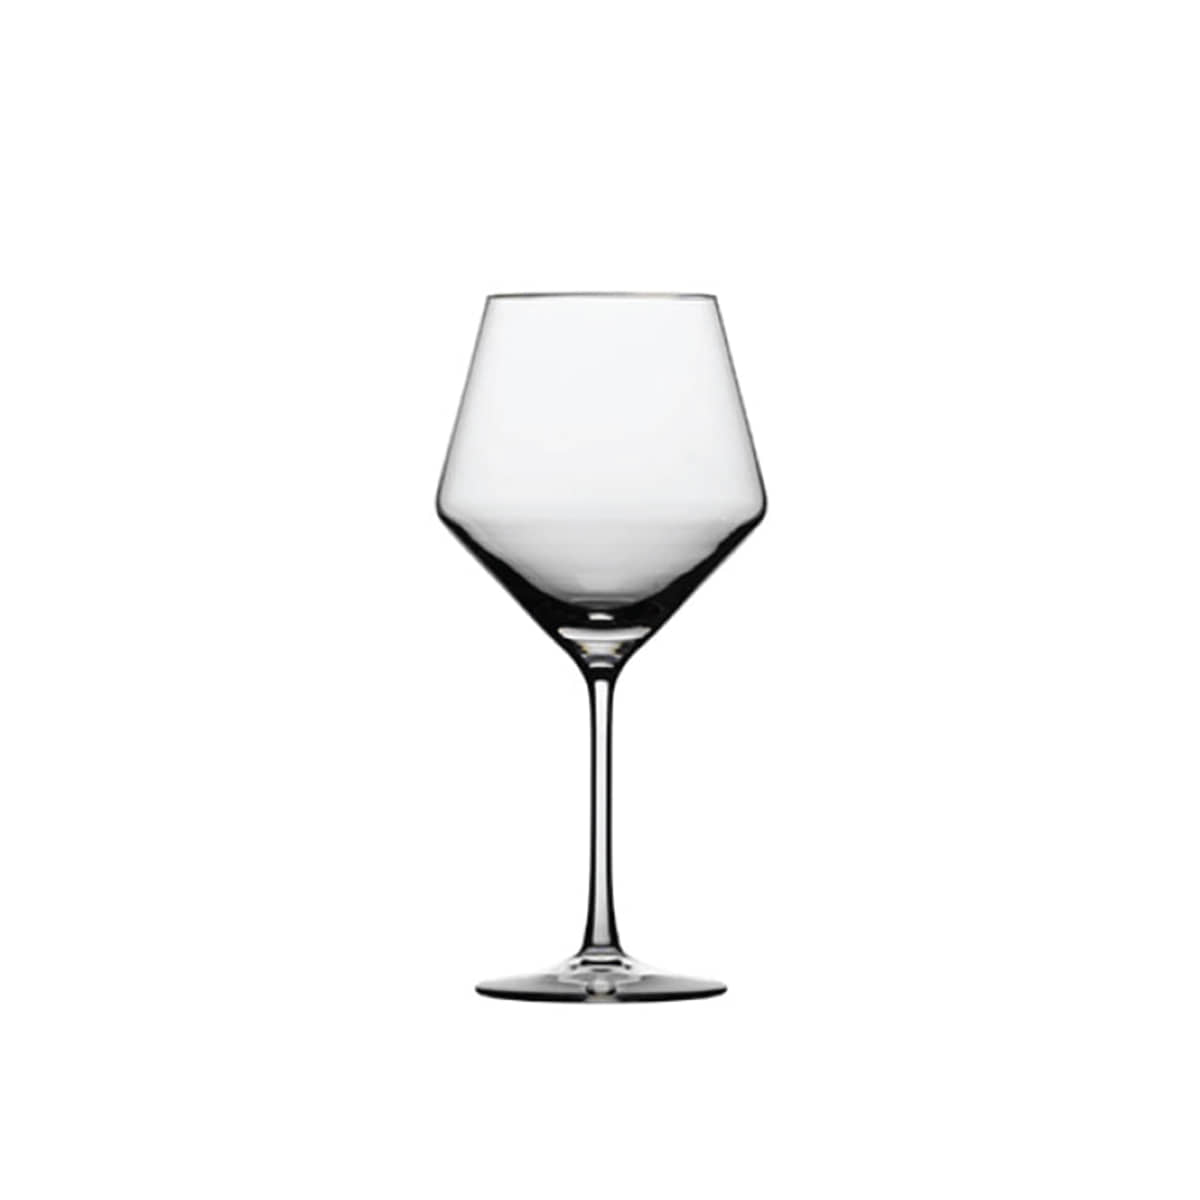 SCHOTT ZWIESEL Wine Glass 쇼트즈위젤 와인잔_XCHO-0421MADE  IN  GERMANY